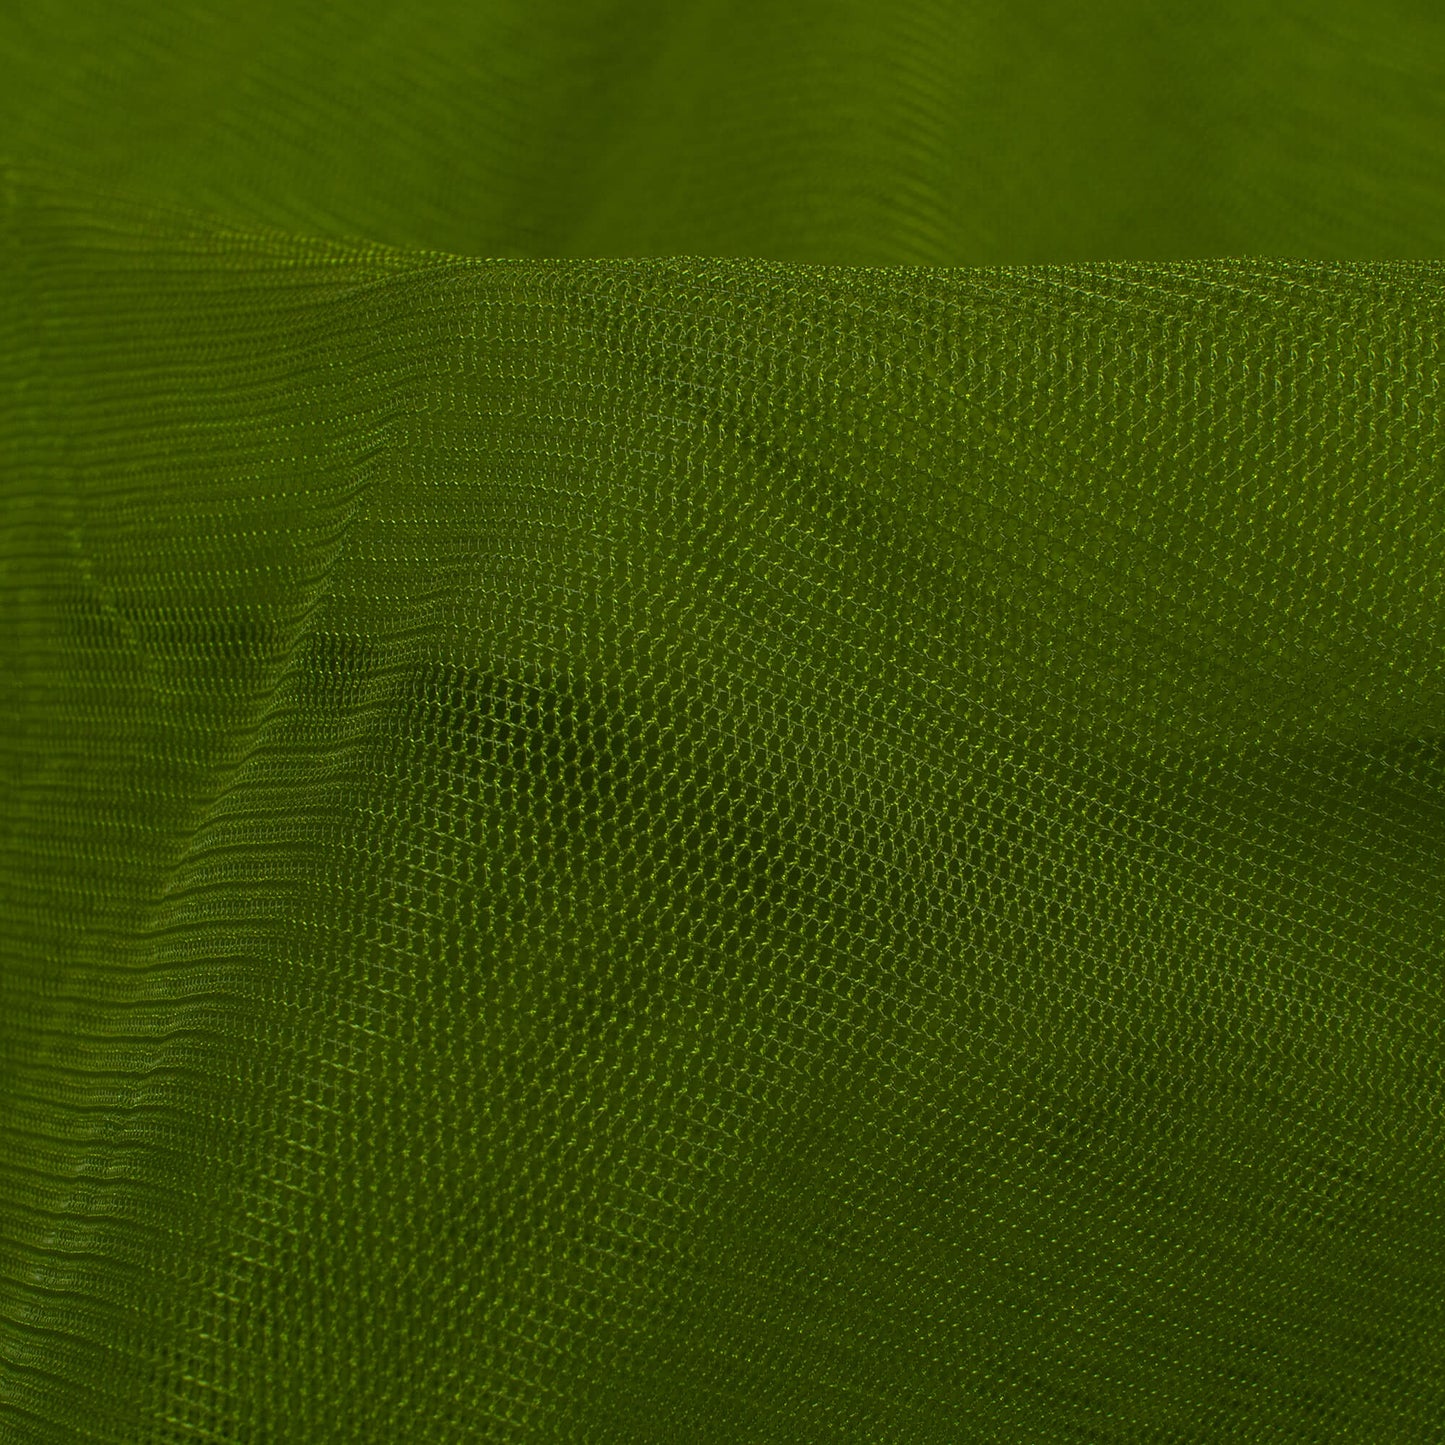 Sap Green Plain Premium Quality Butterfly Net Fabric